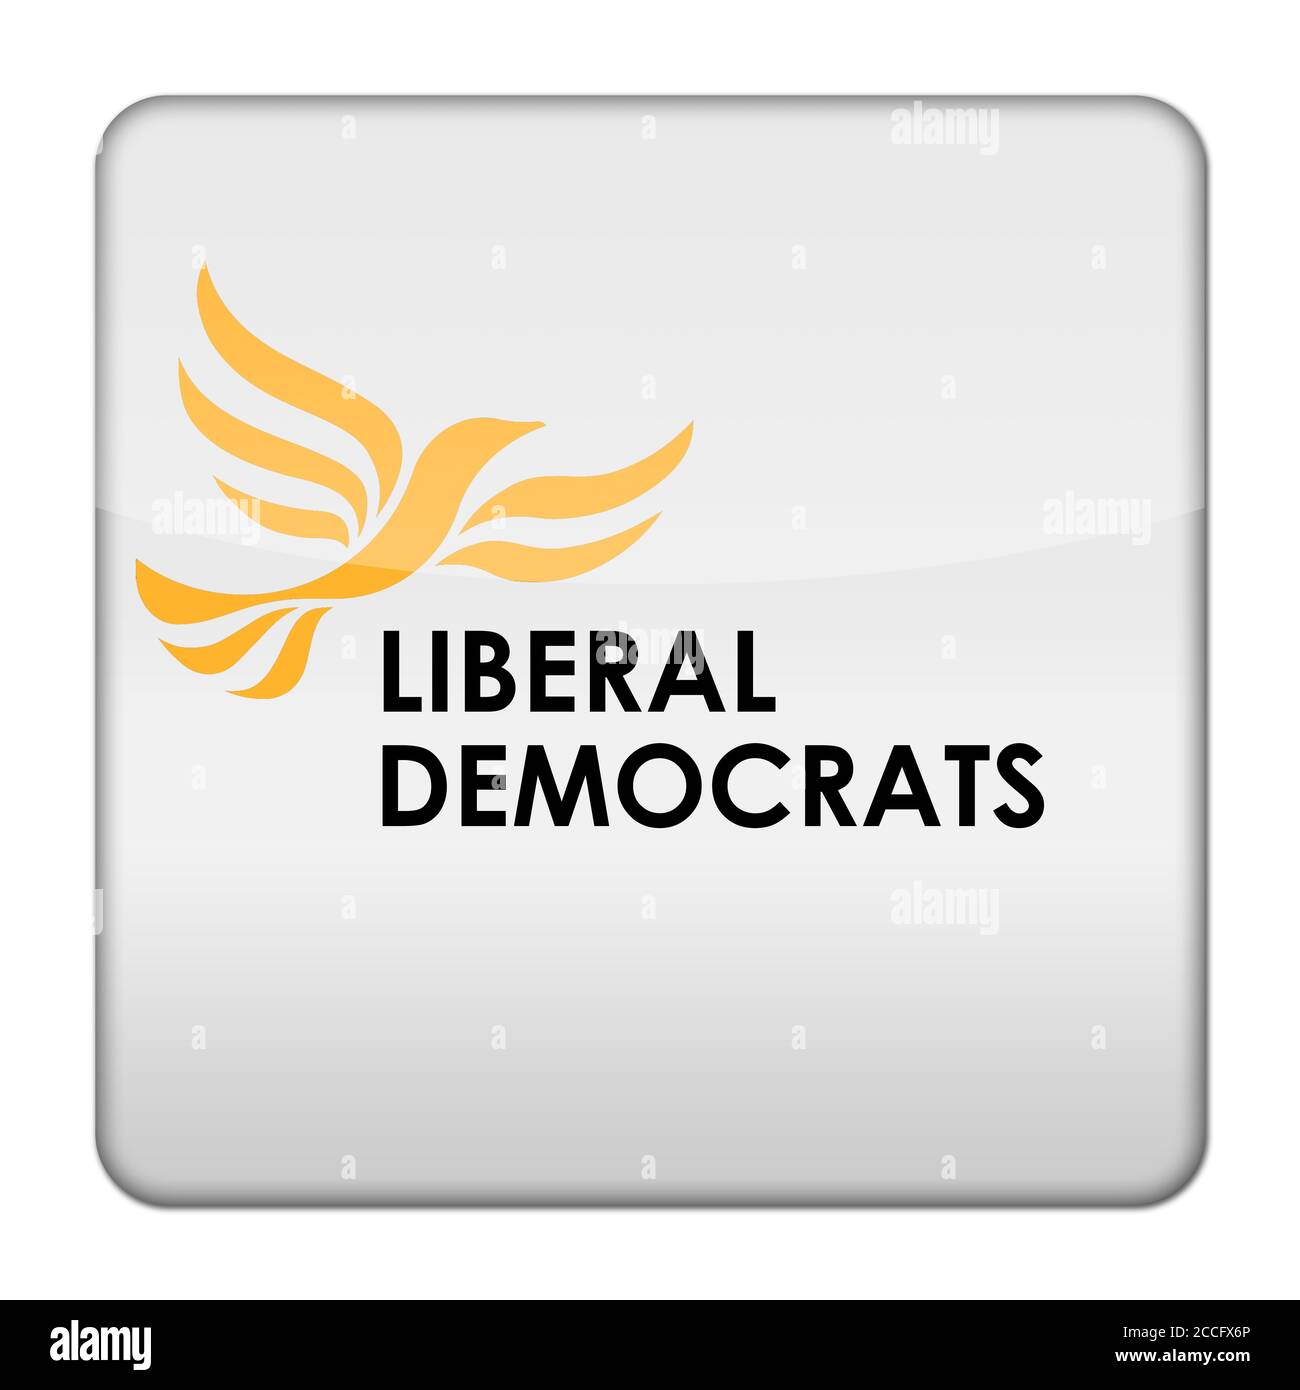 Liberal Democrats Party Stock Photo